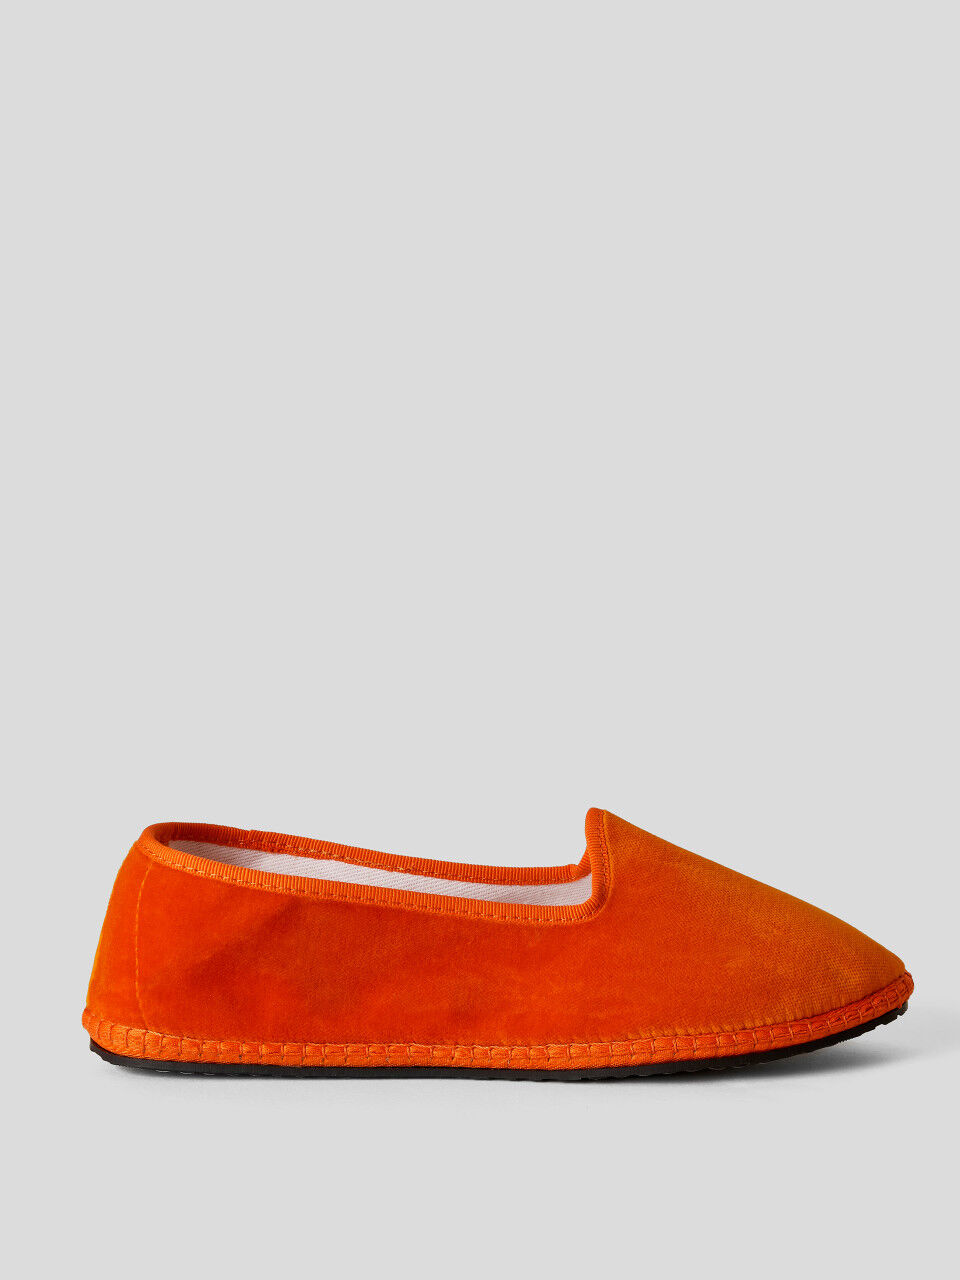 Sapatos Friulane laranja de veludo